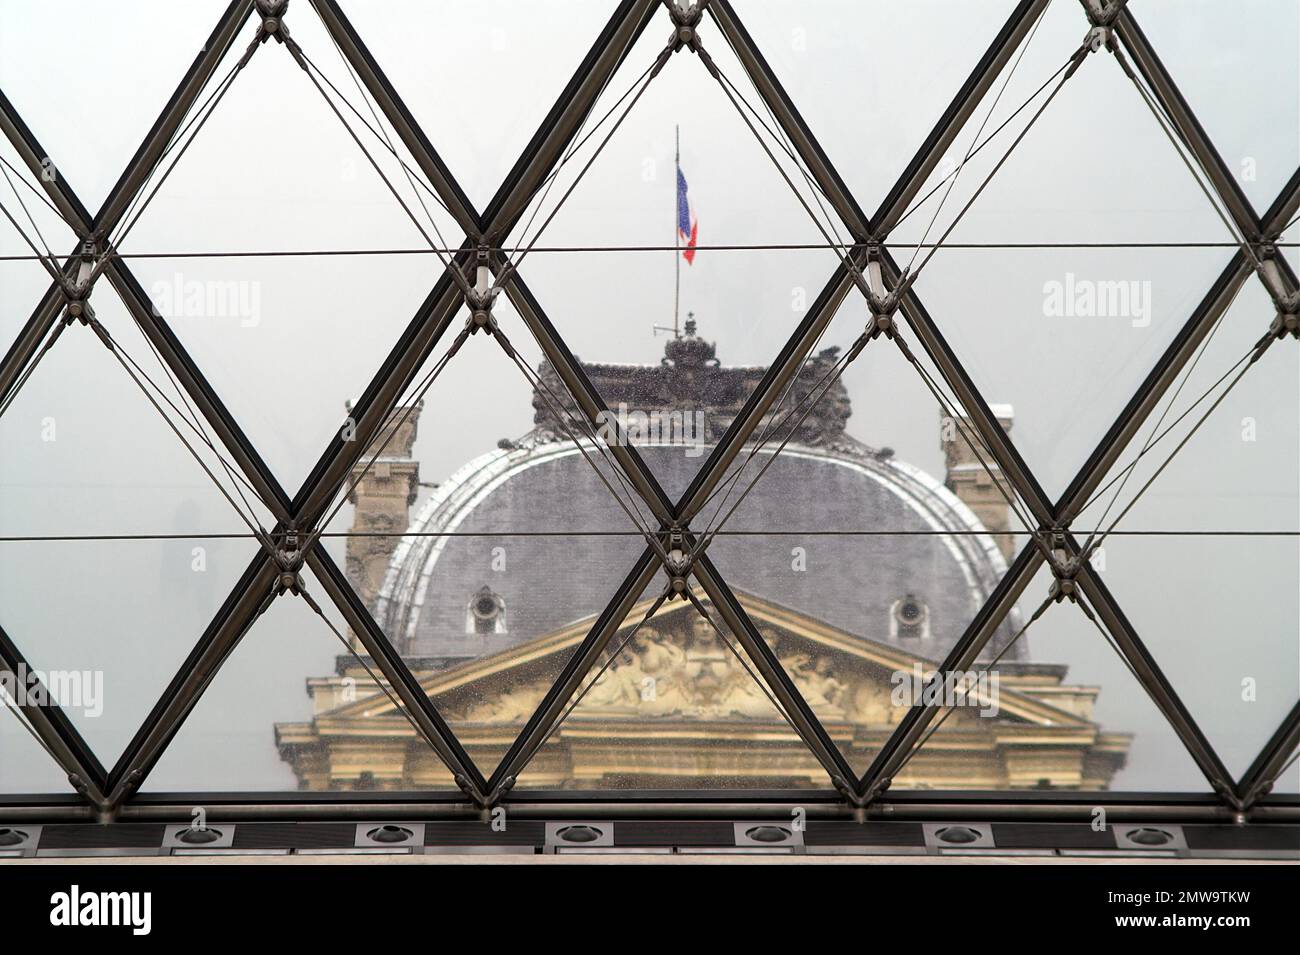 Paryż, Paris, Louvre Museum, Francja, Frankreich, Frankreich, das Hauptgebäude - Fragment der Fassade; das Hauptgebäude - Fragment der Fassade Stockfoto